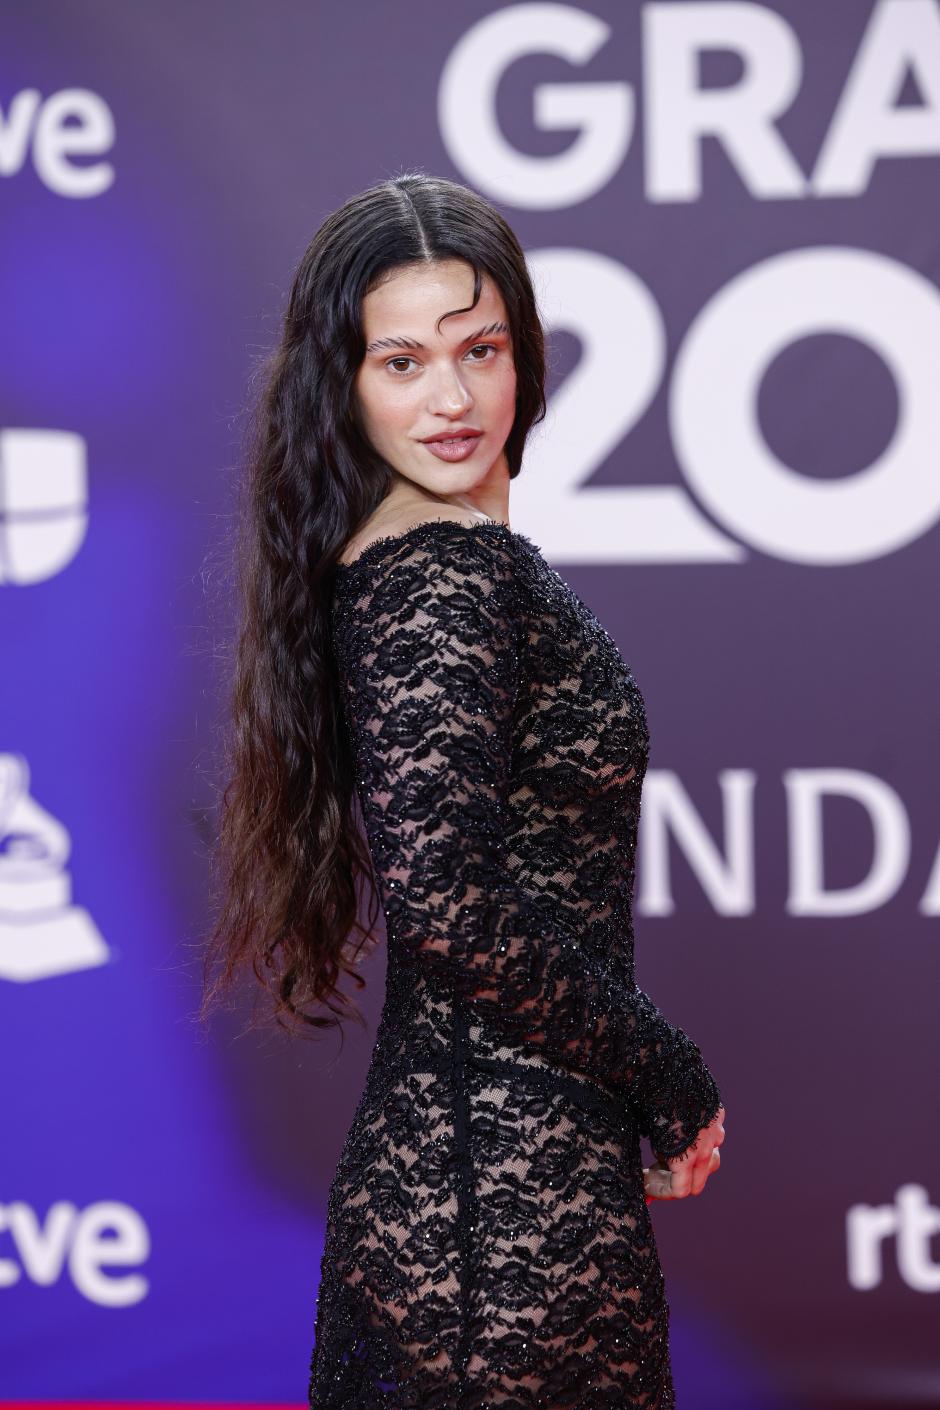 Presenter and formt miss Eva Gonzalez at the 24nd annual Latin Grammy Awards 2023 in Sevilla on Thursday, 16 November 2023.